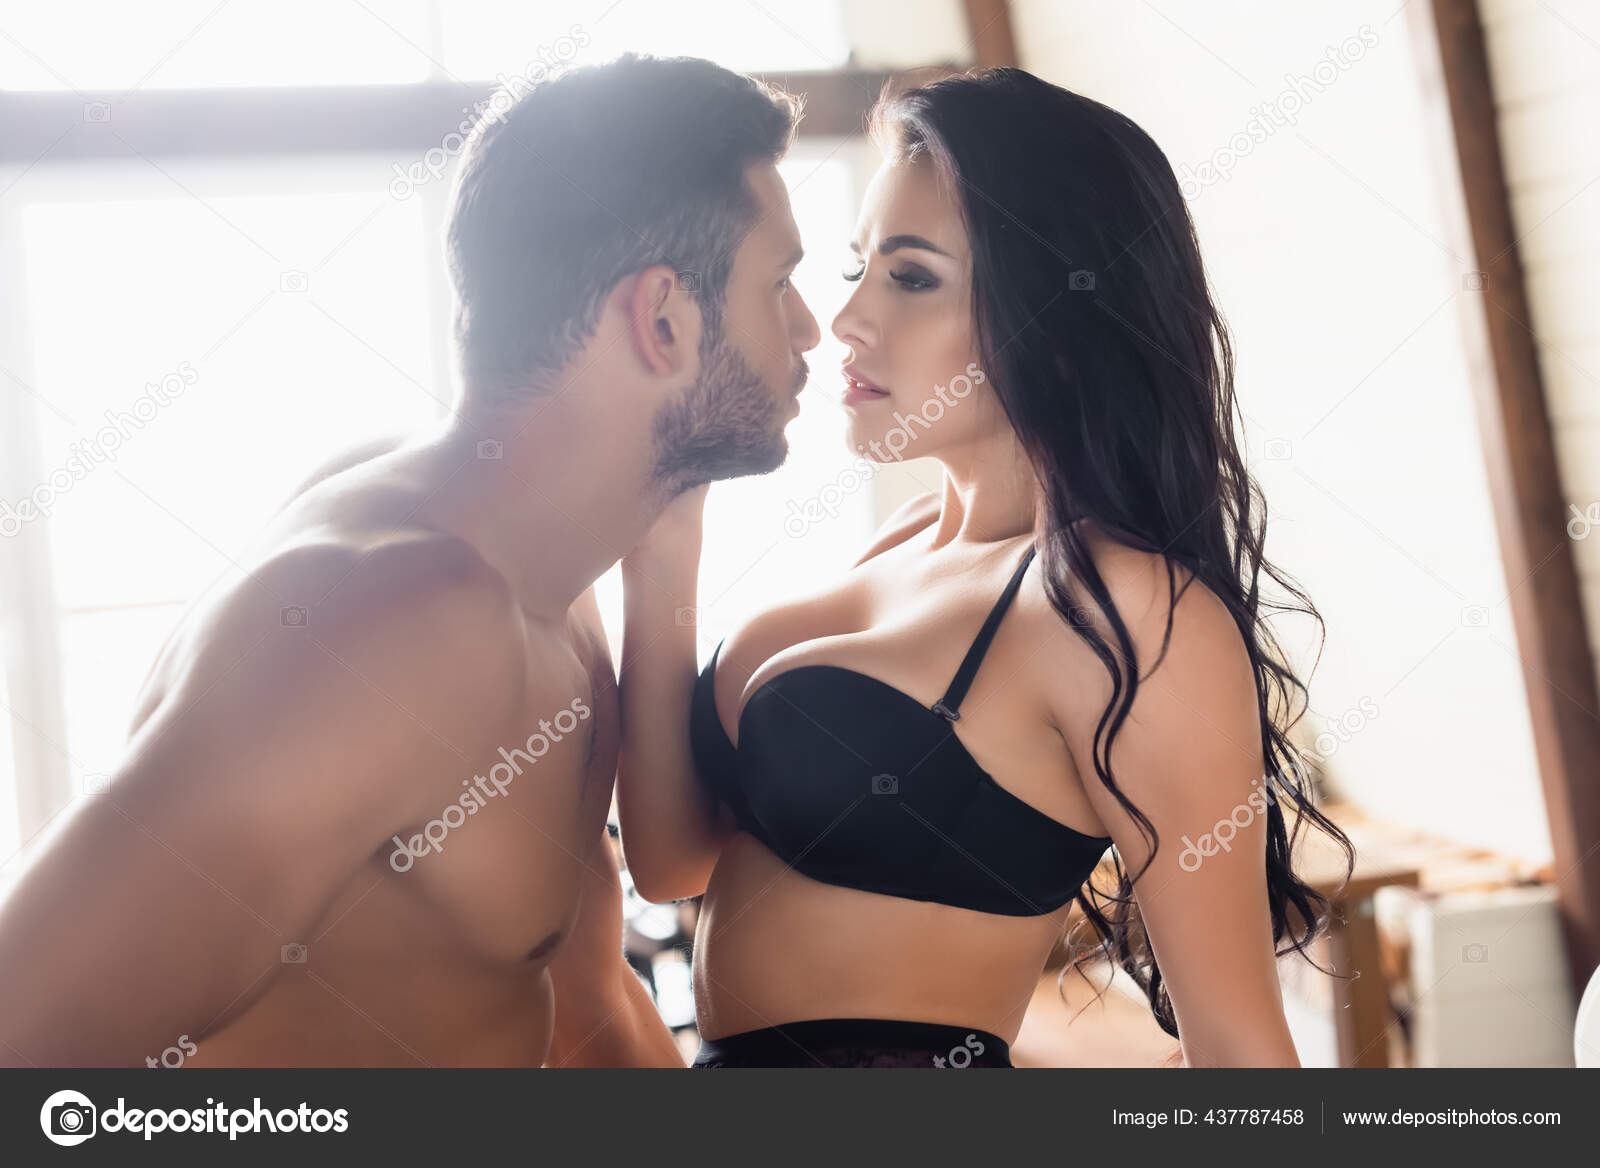 Side View Sexy Muscular Man Seductive Brunette Woman Black Bra Stock Photo by ©VitalikRadko 437787458 pic